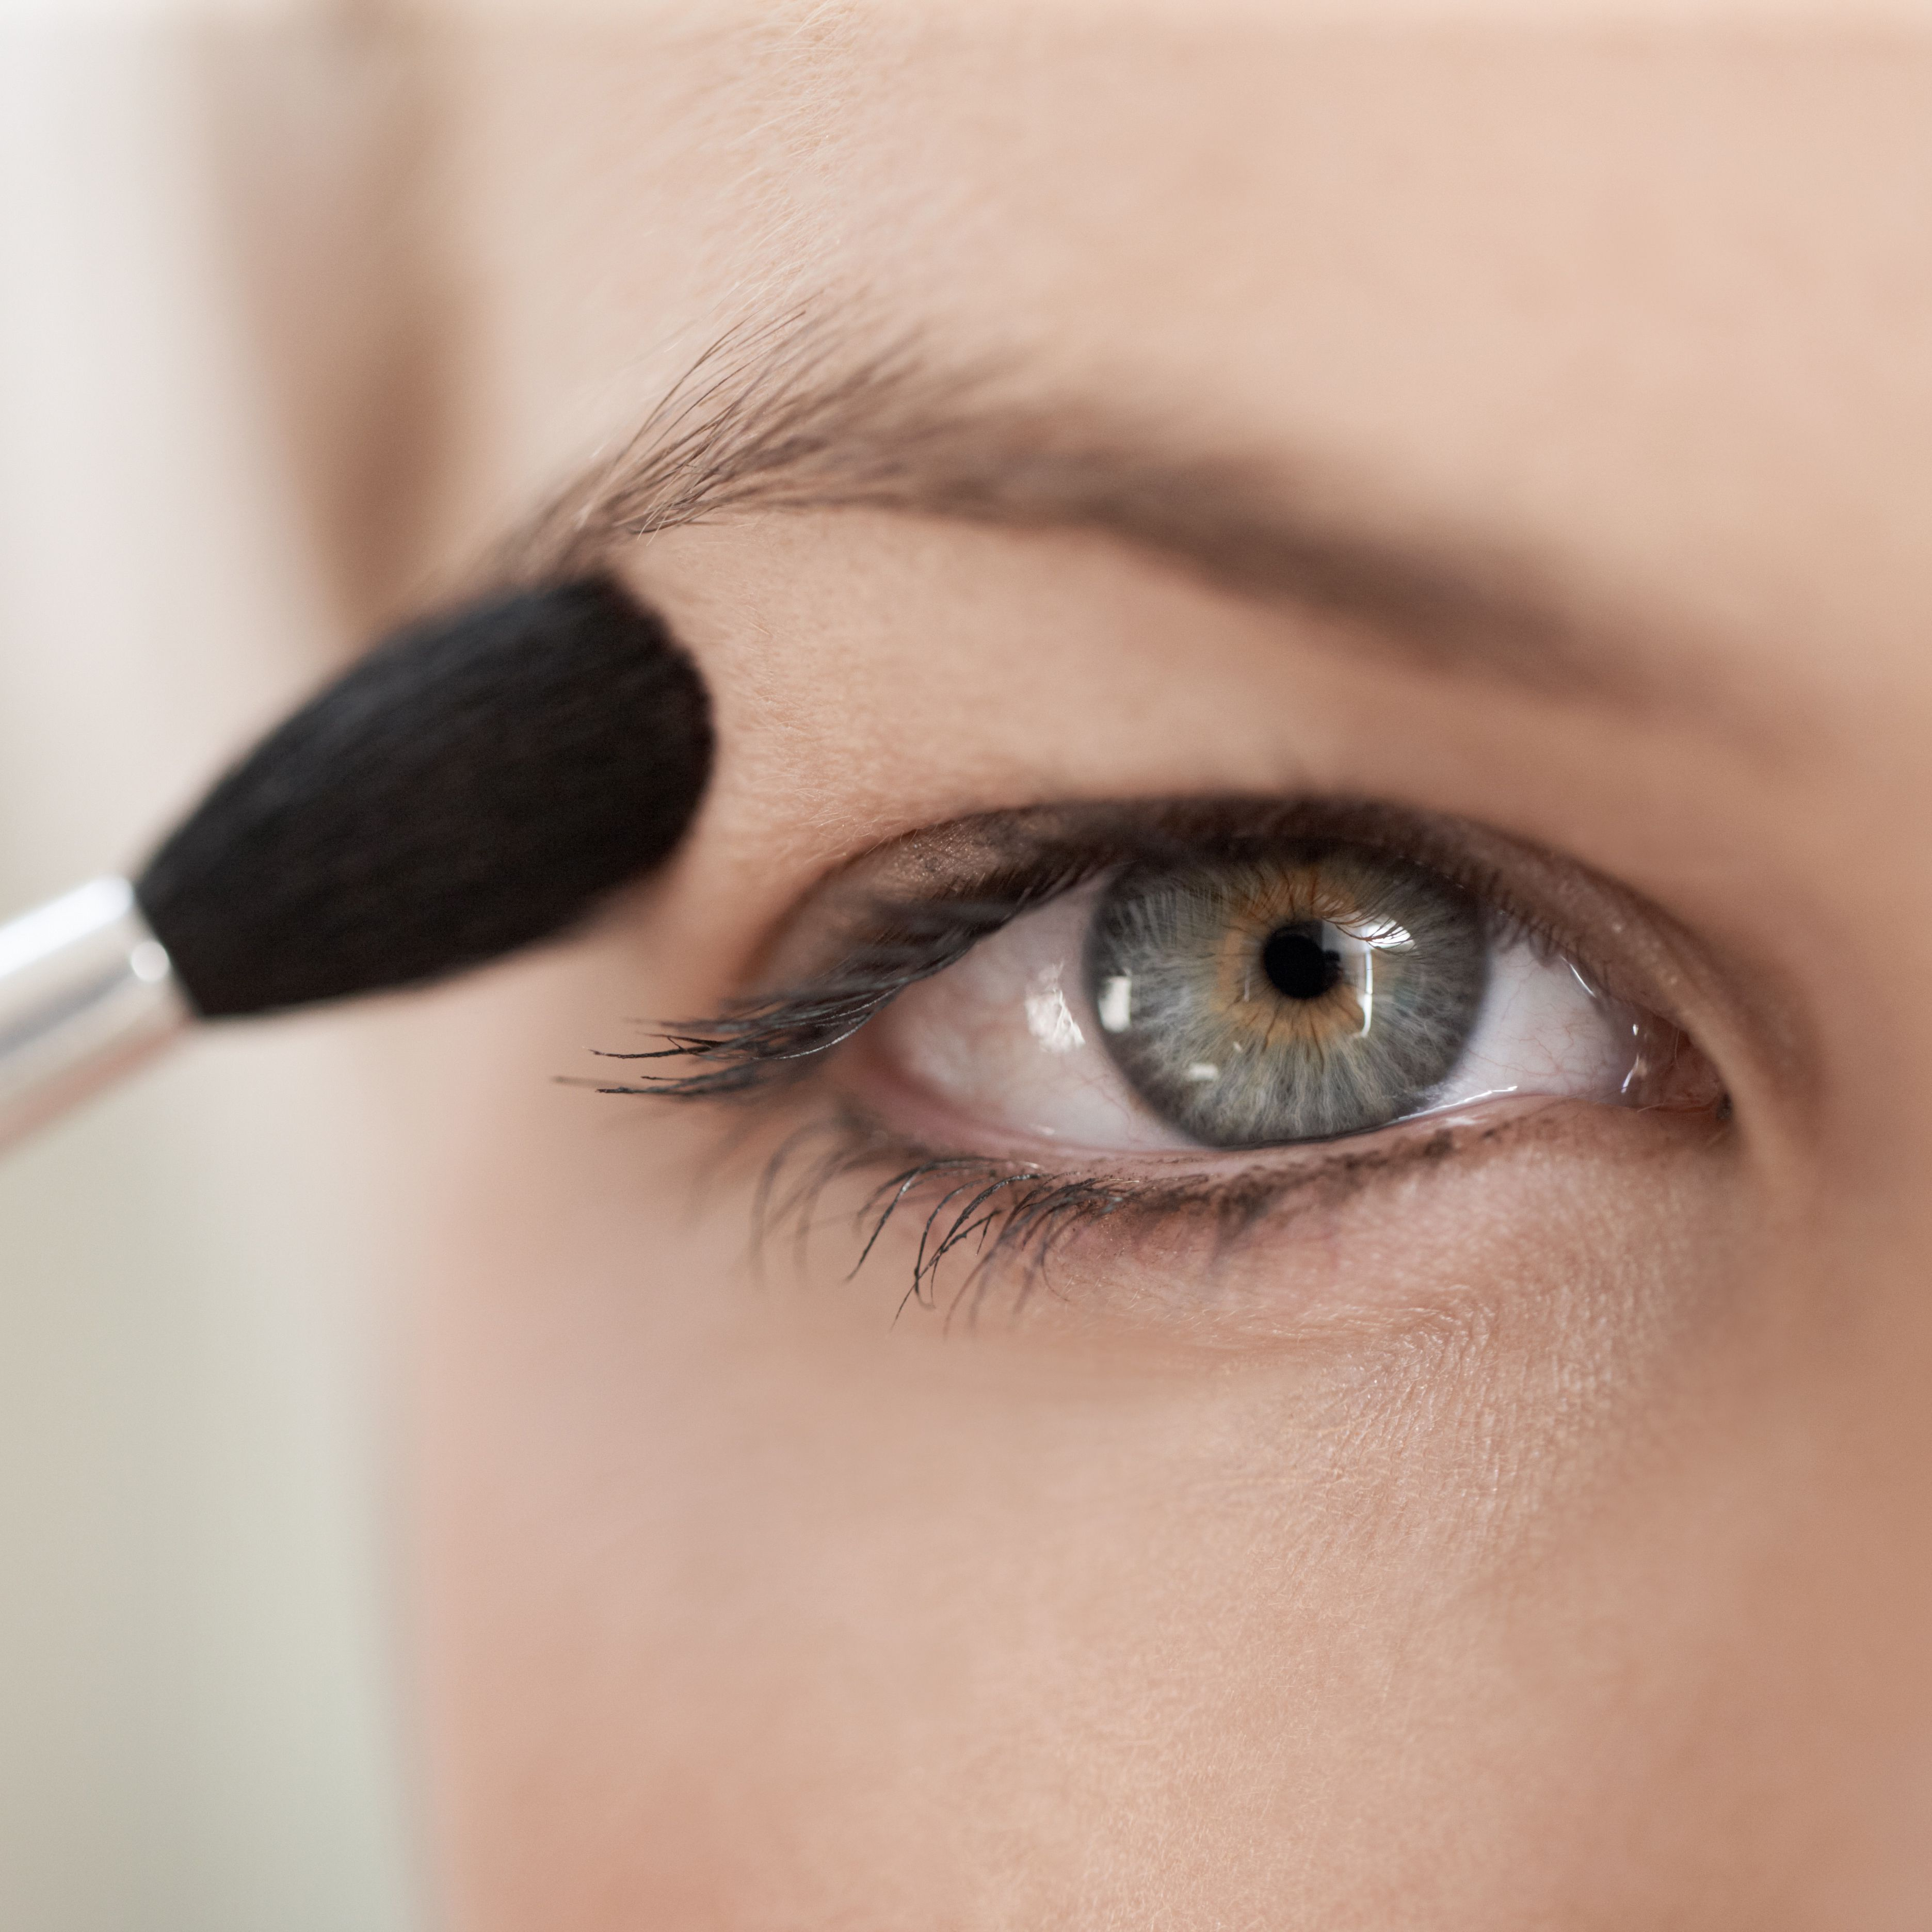 How To Do My Eye Makeup Makeup Tricks For Hooded Eyes Hooded Eyes Makeup Tips And Tricks